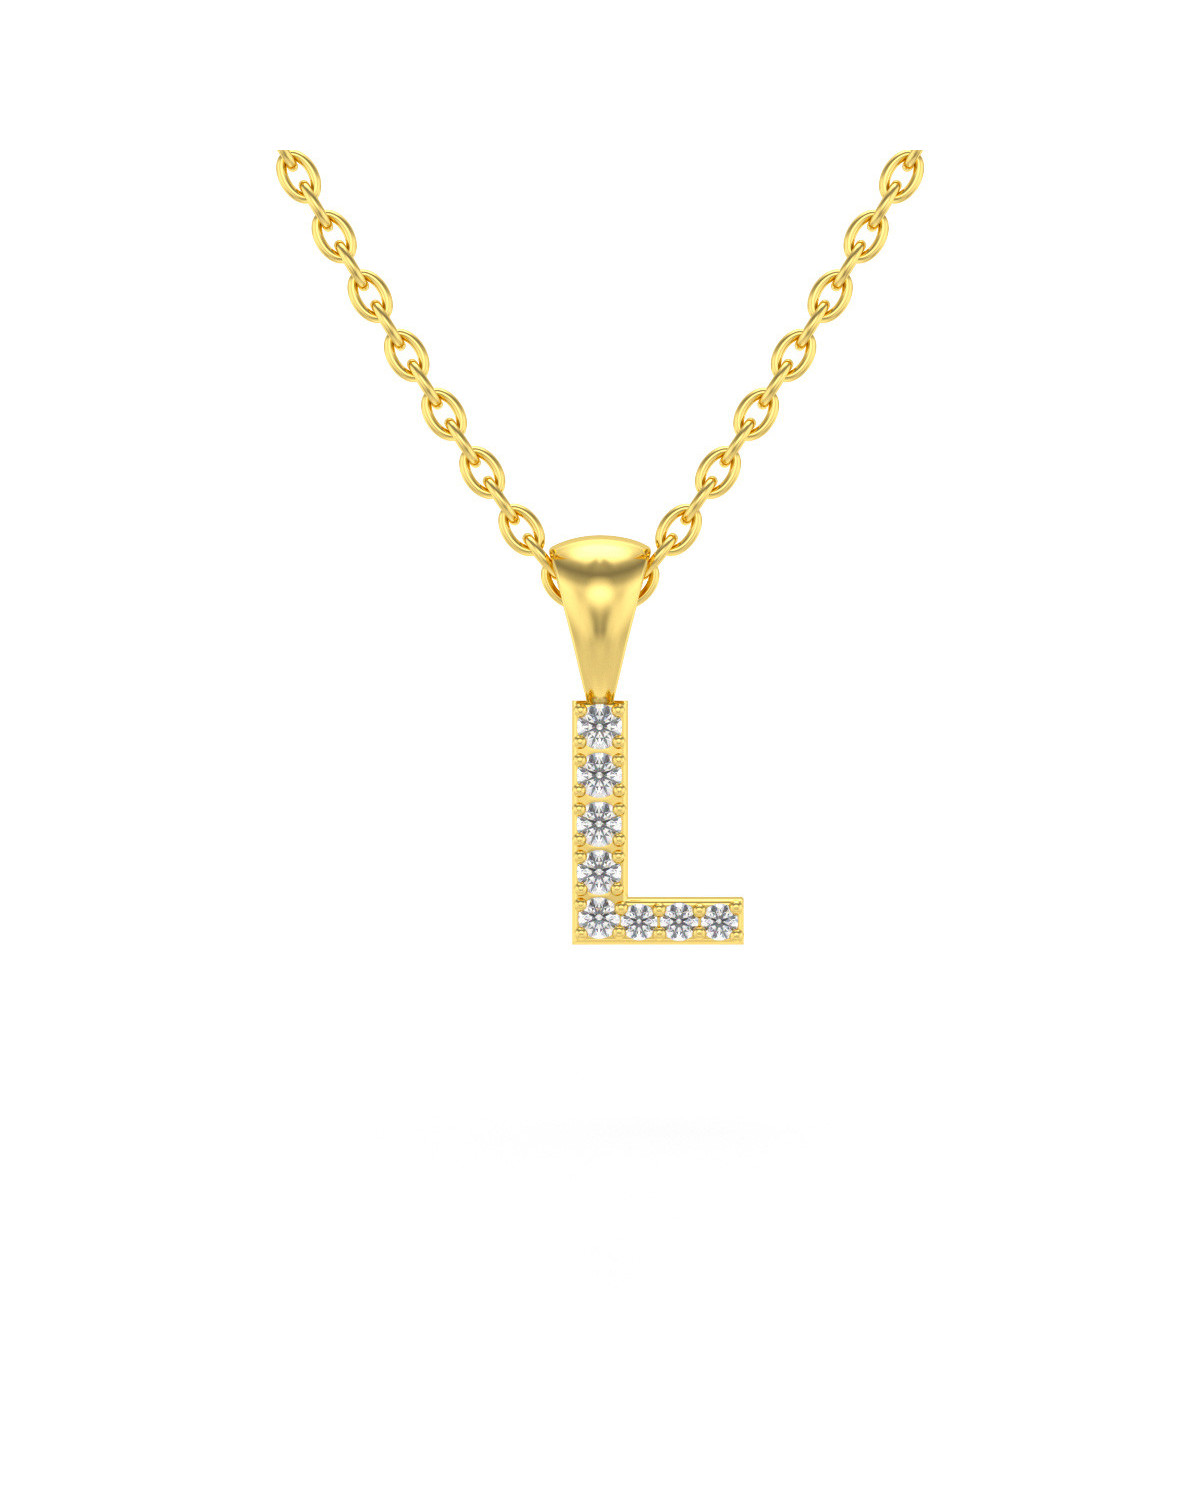 Collier Pendentif Lettre L Or Jaune Diamant Chaine Or incluse 0.72grs